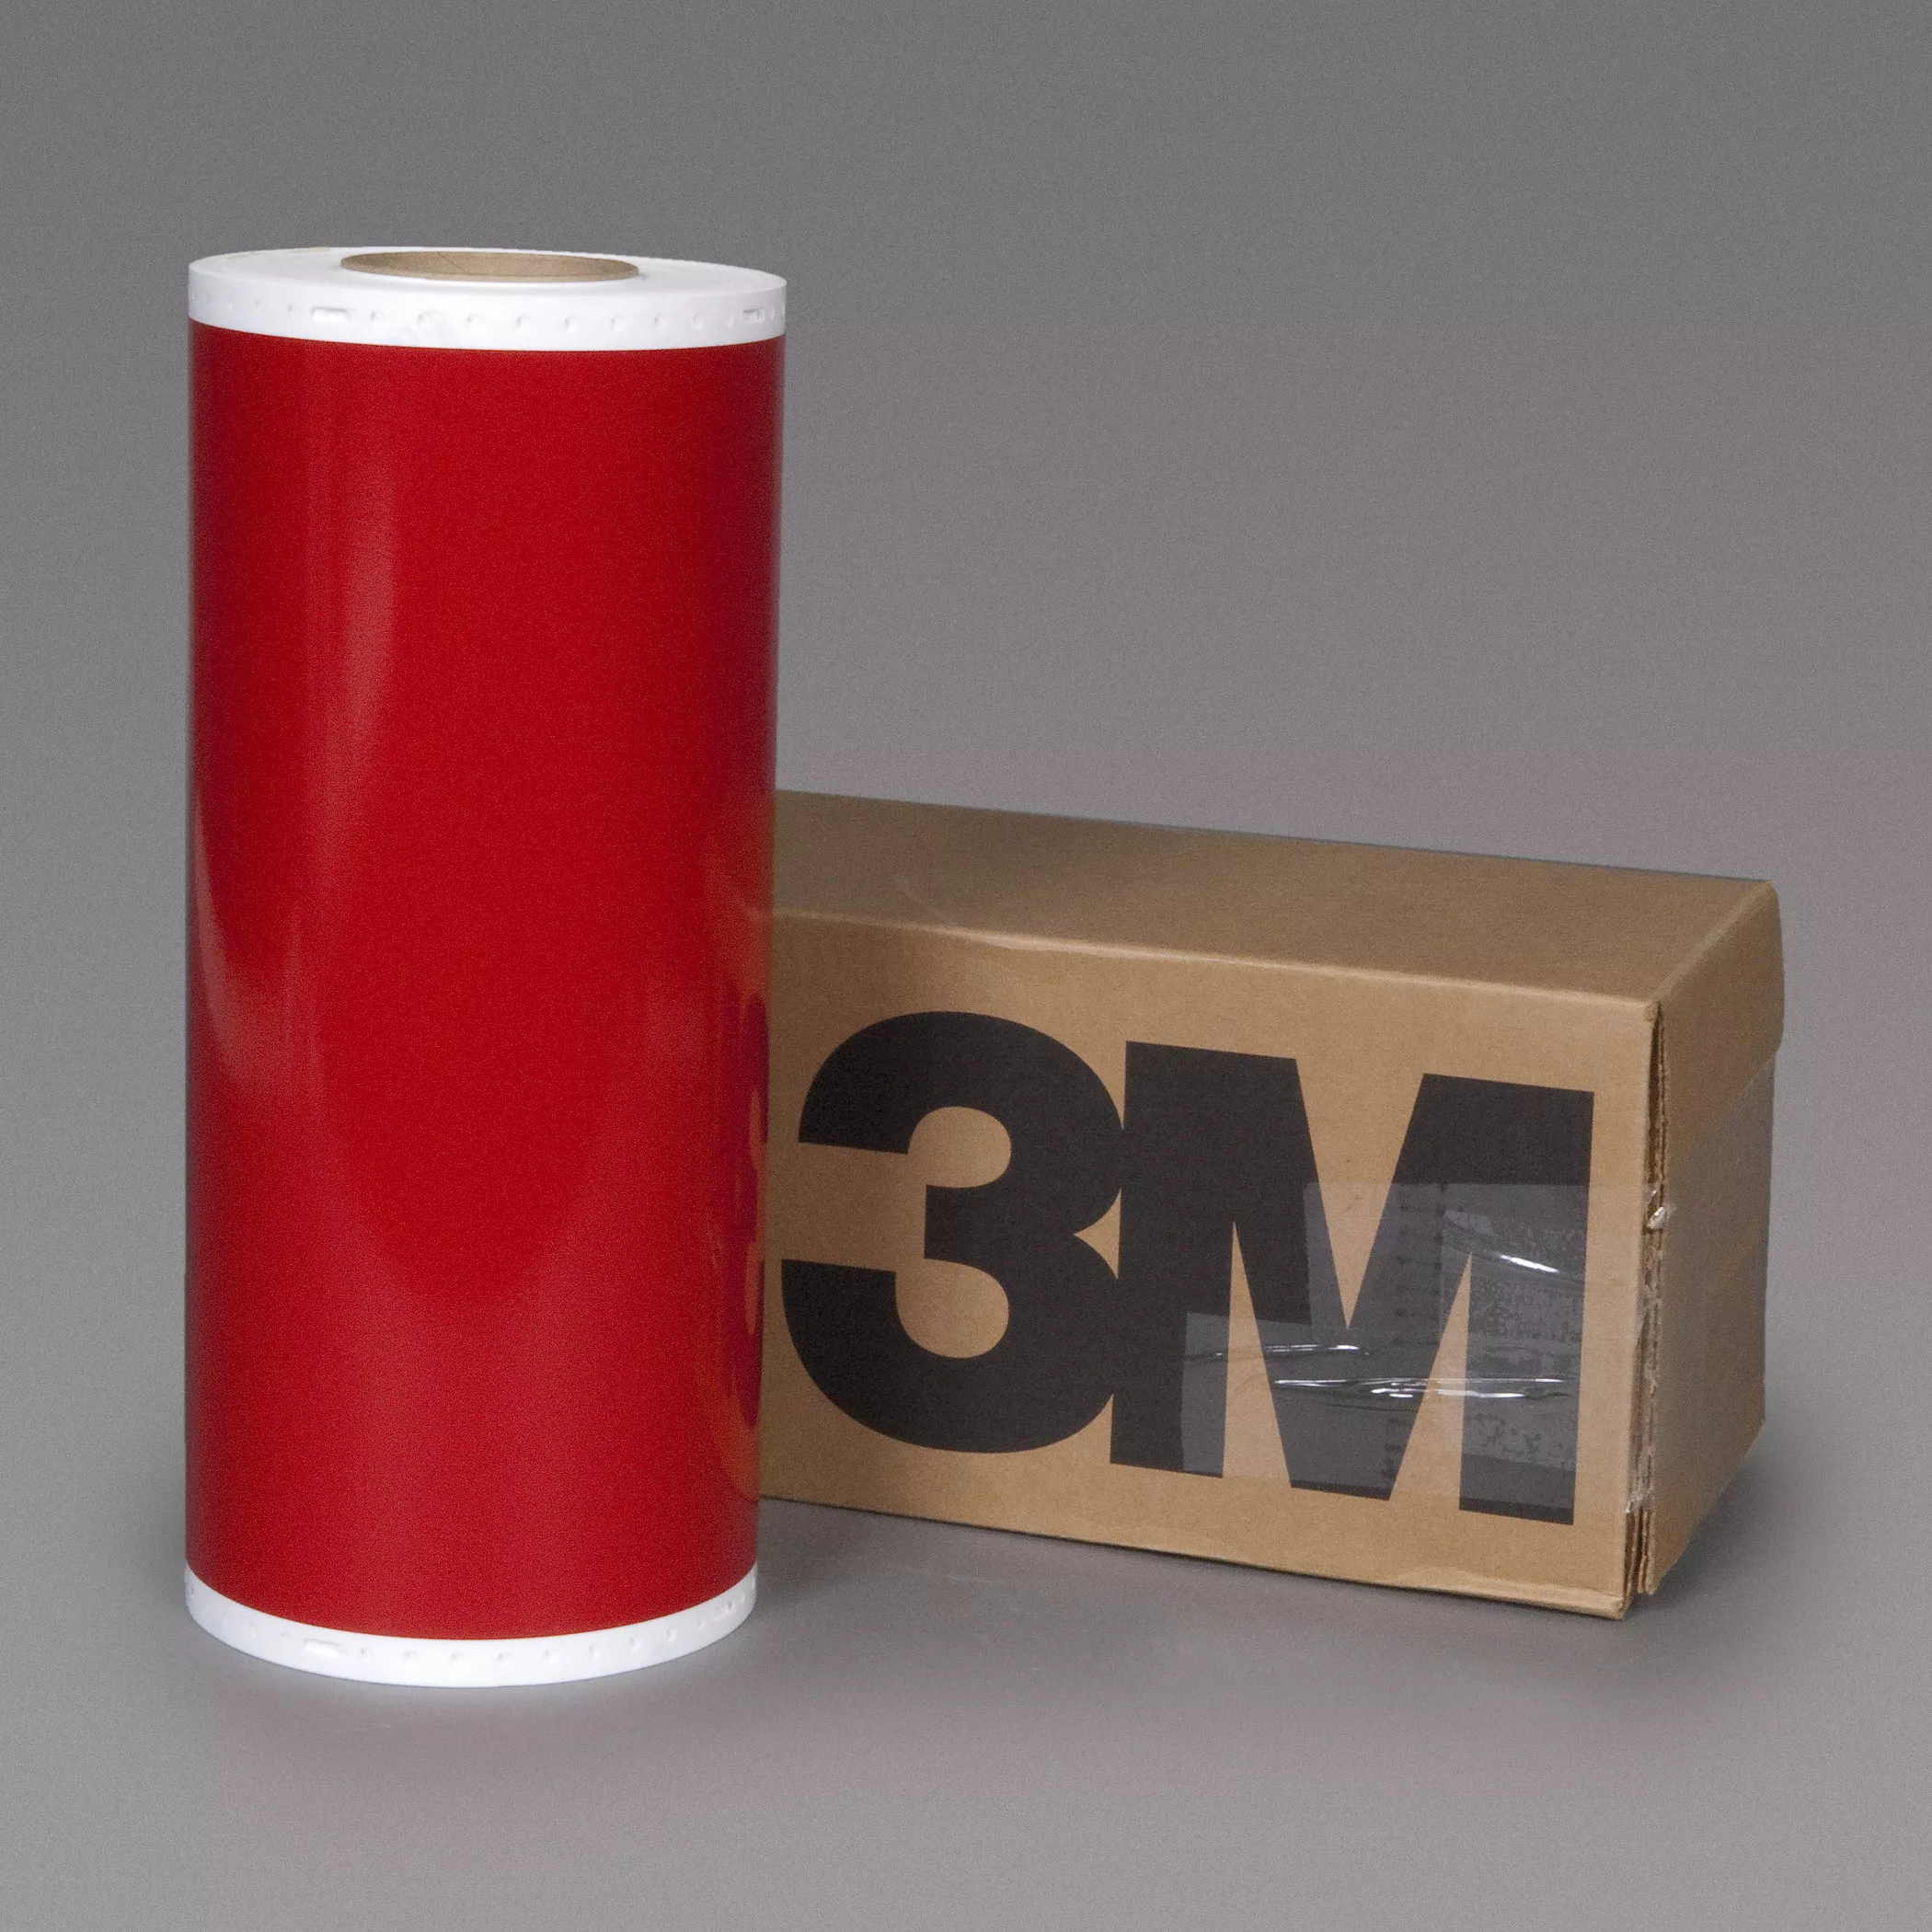 3M™ Scotchlite™ Reflective Graphic Film 6241, Bright Warm Red, 48 in x
50 yd